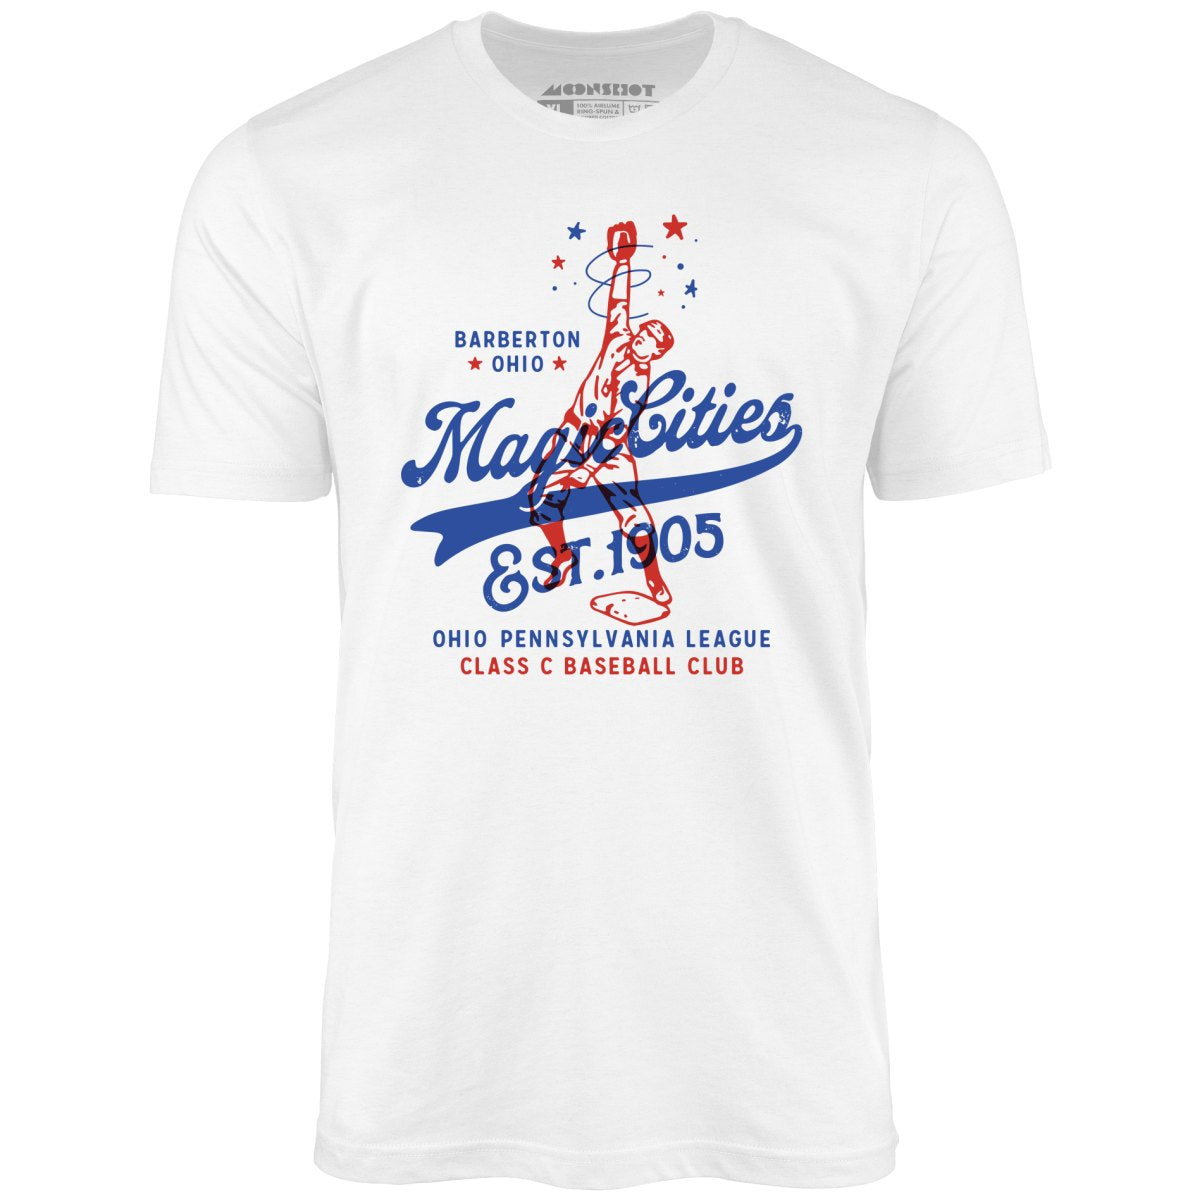 Barberton Magic Cities - Ohio - Vintage Defunct Baseball Teams - Unisex T-Shirt